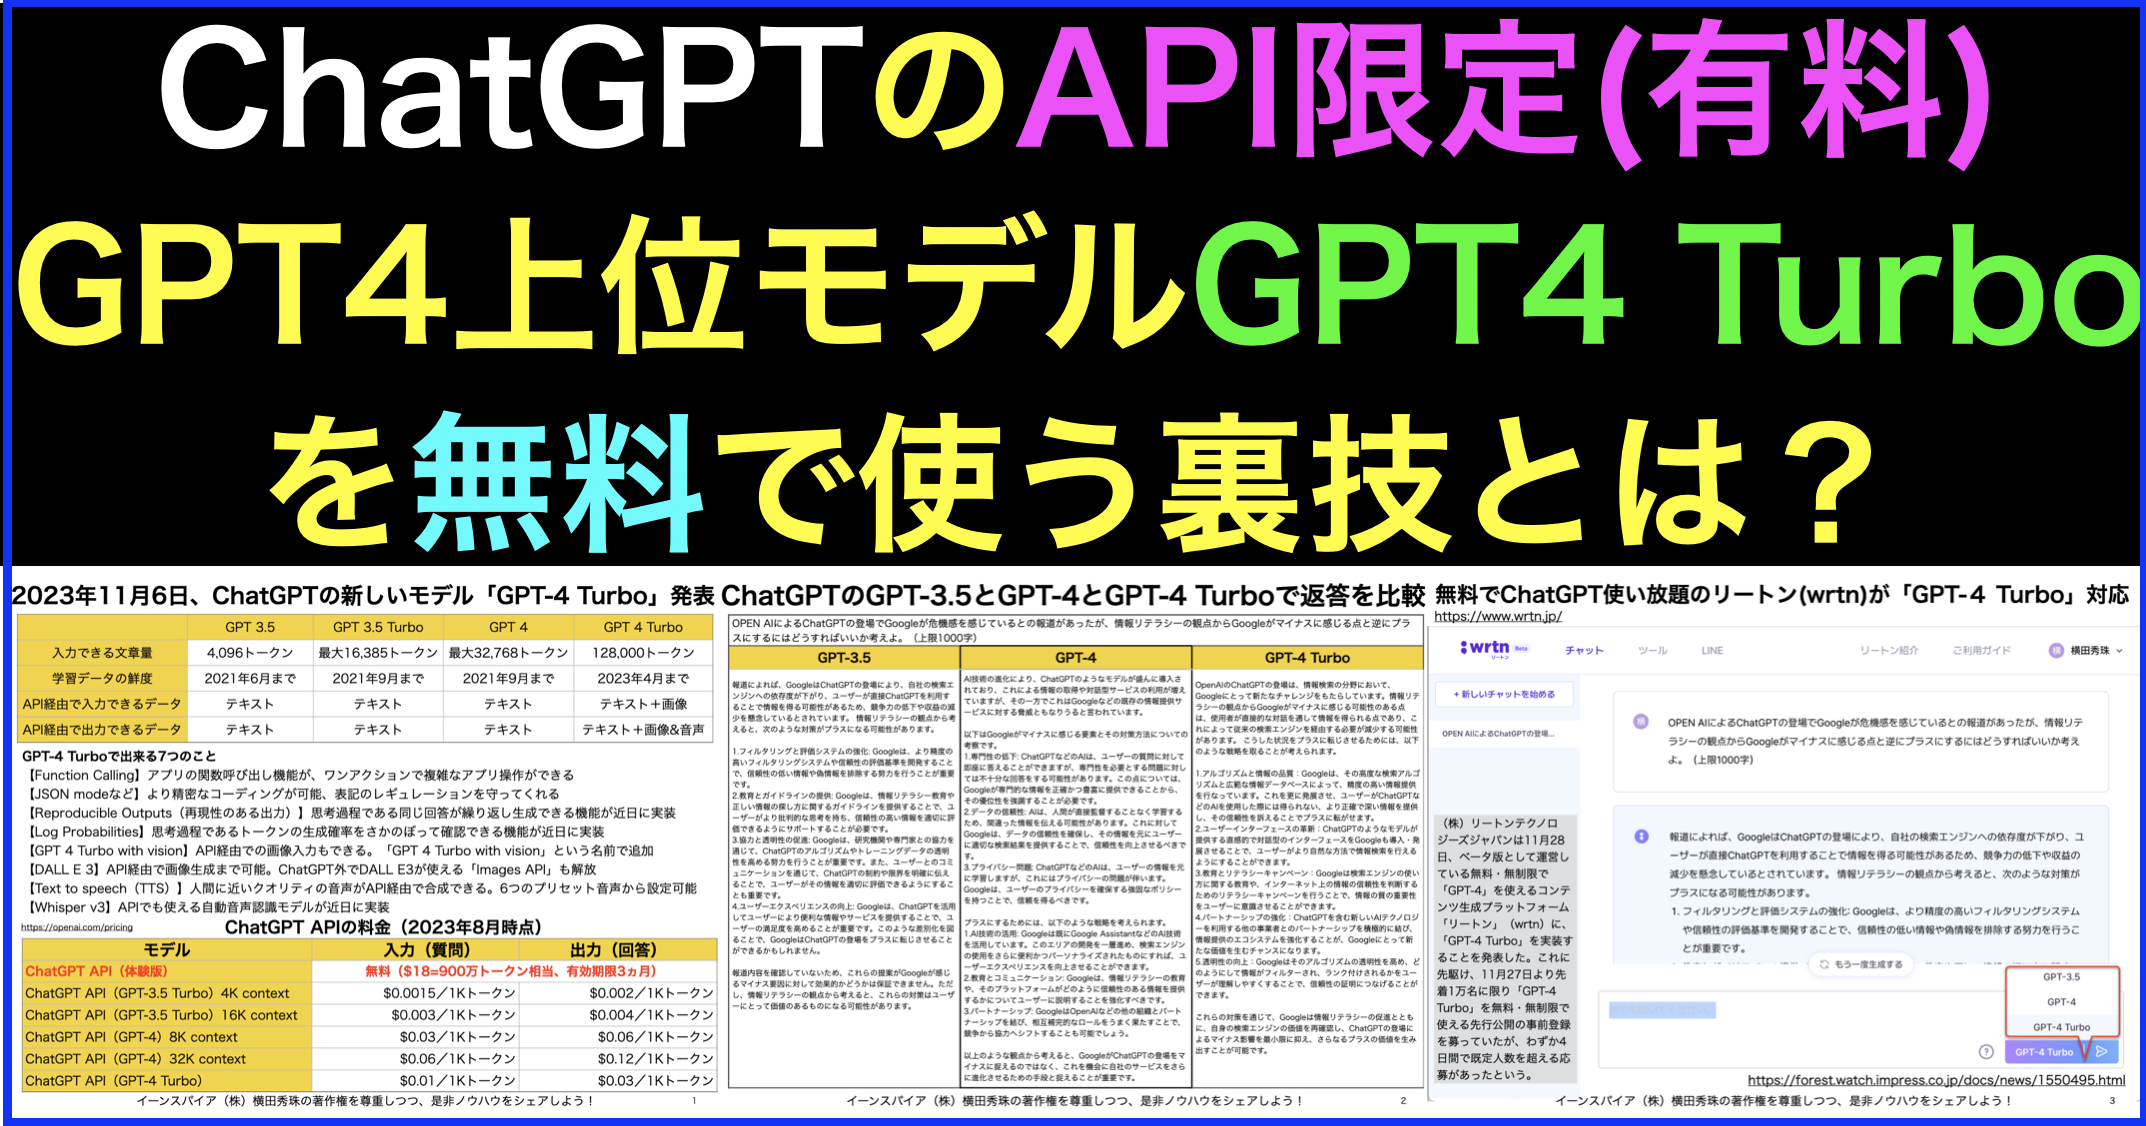 ChatGPTでAPI限定のGPT-4 Turboを無制限に無料で使う裏技